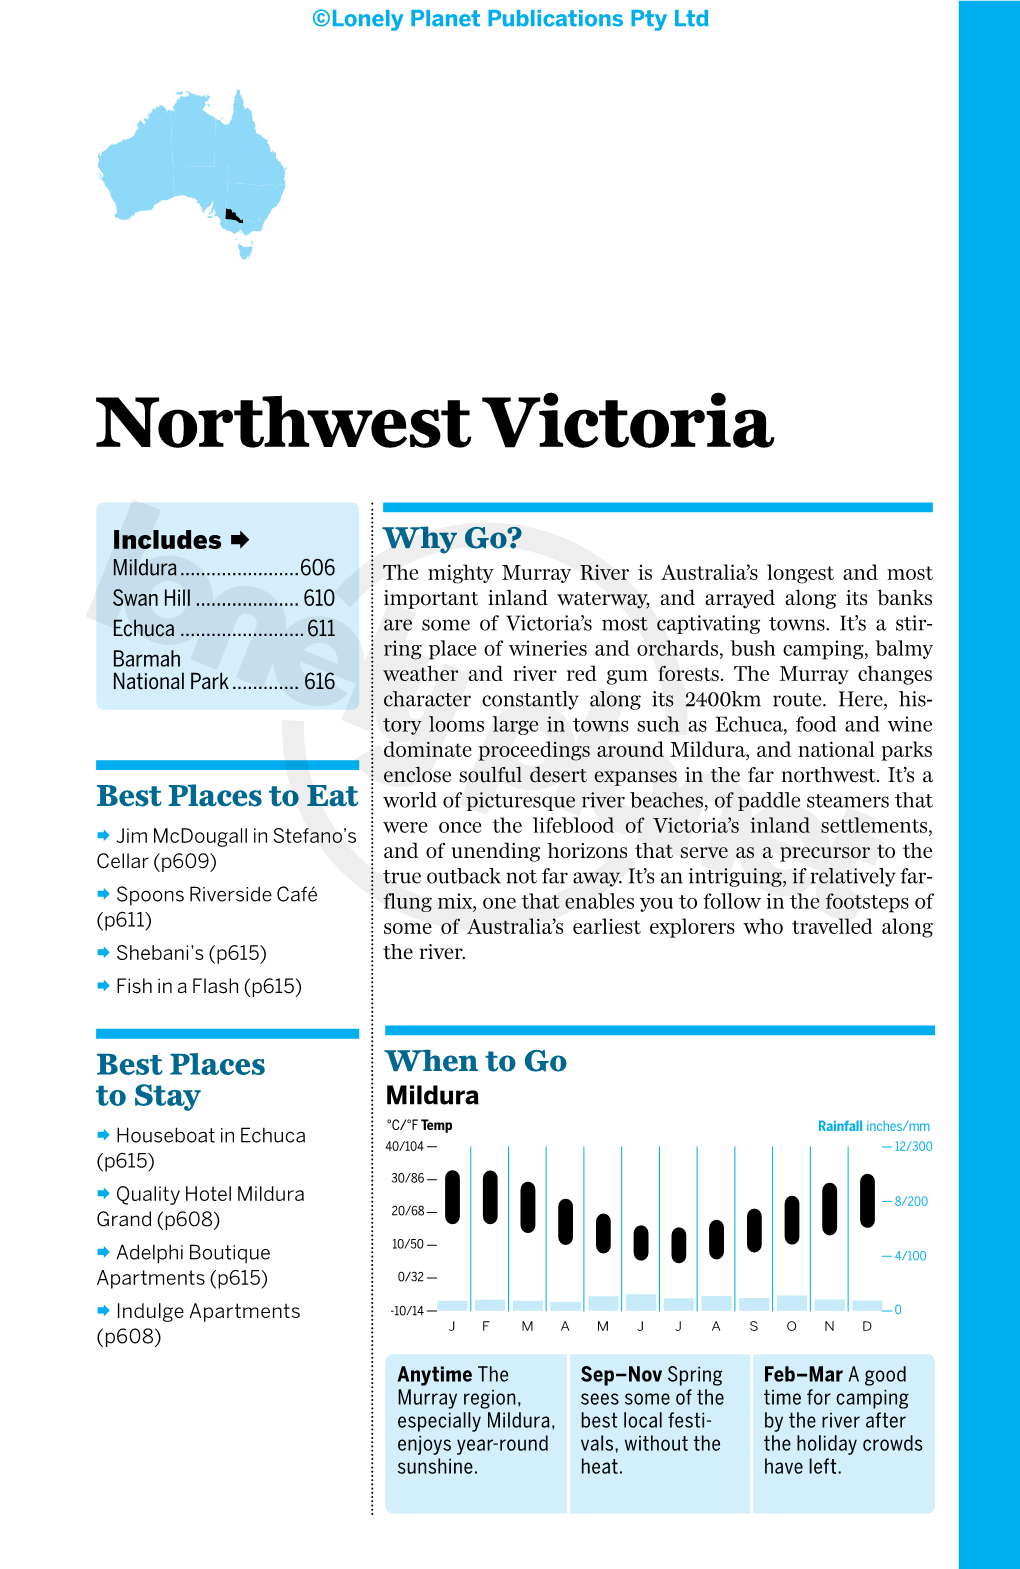 Northwest Victoria